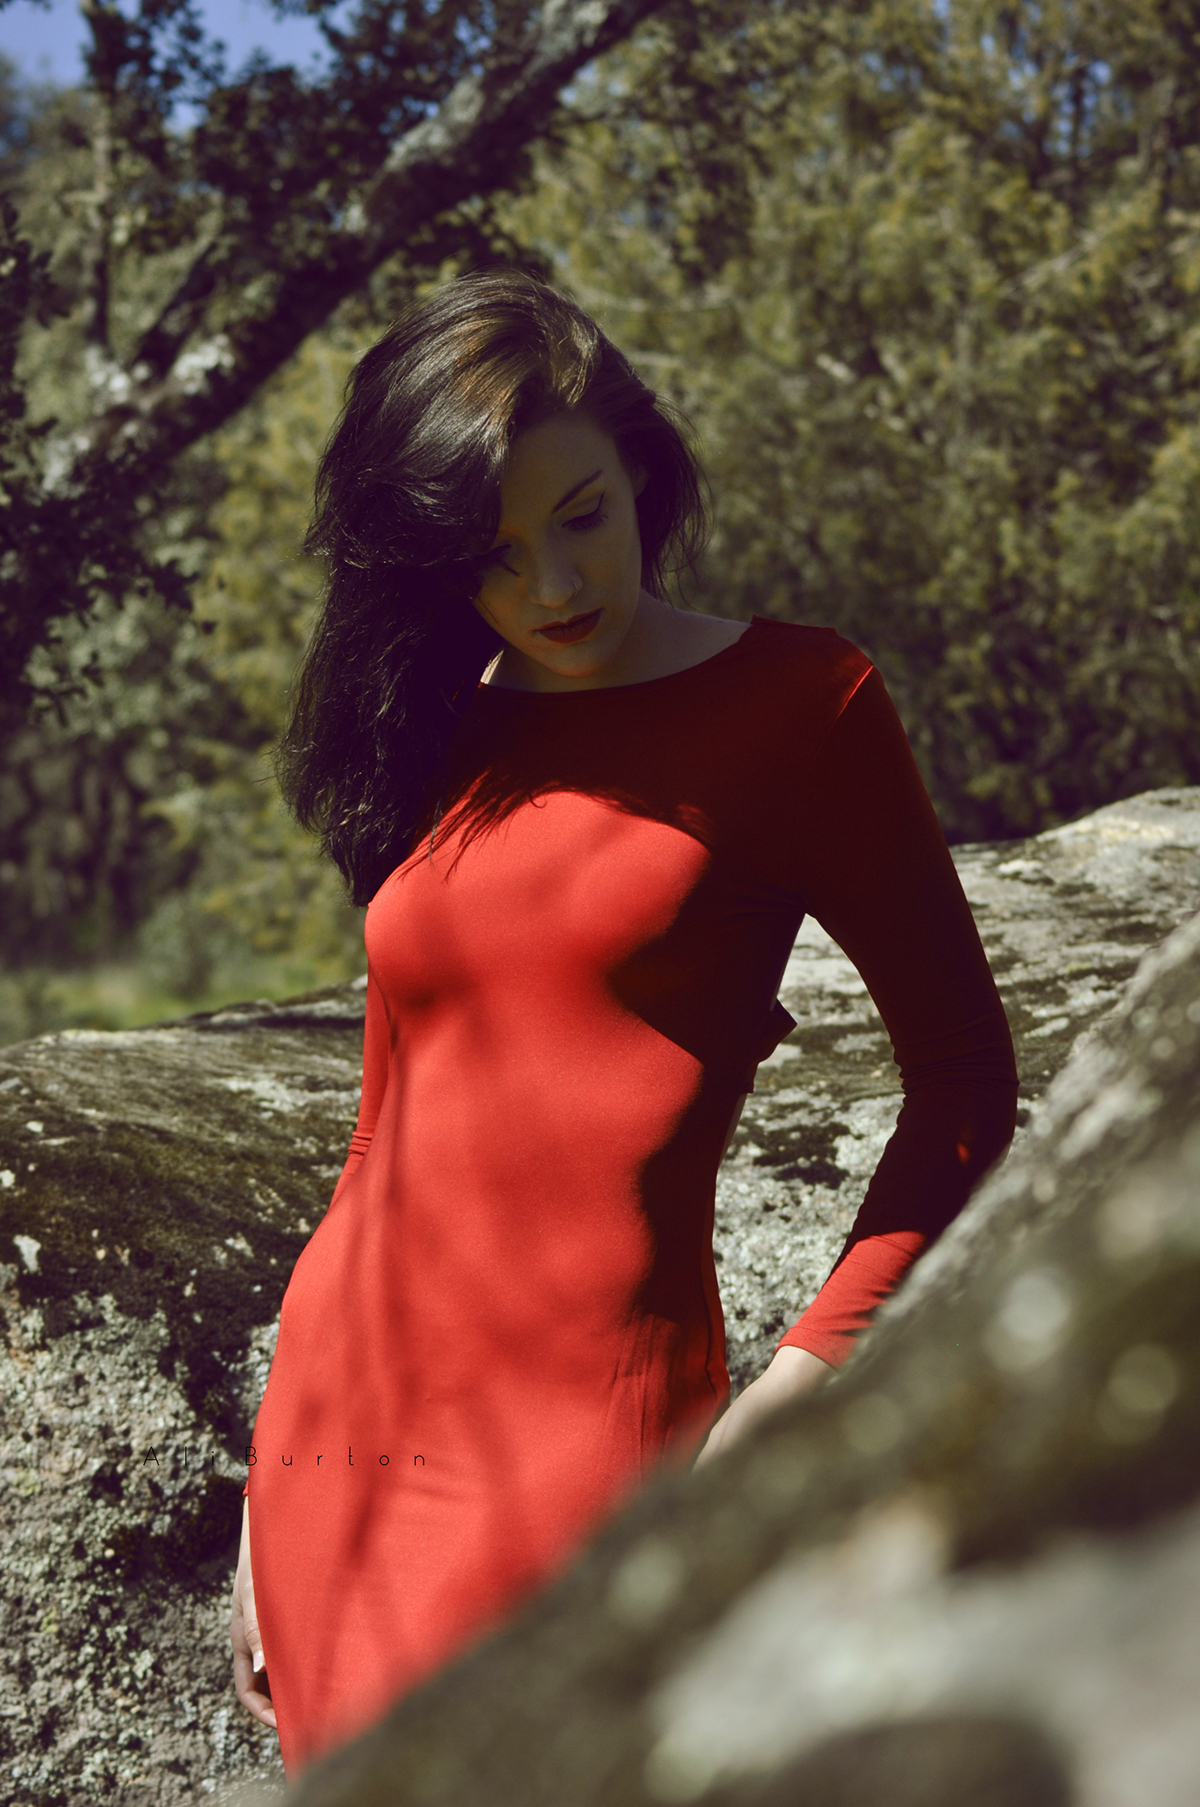 red dress Shadows forest light Sun photo girl Aliburton